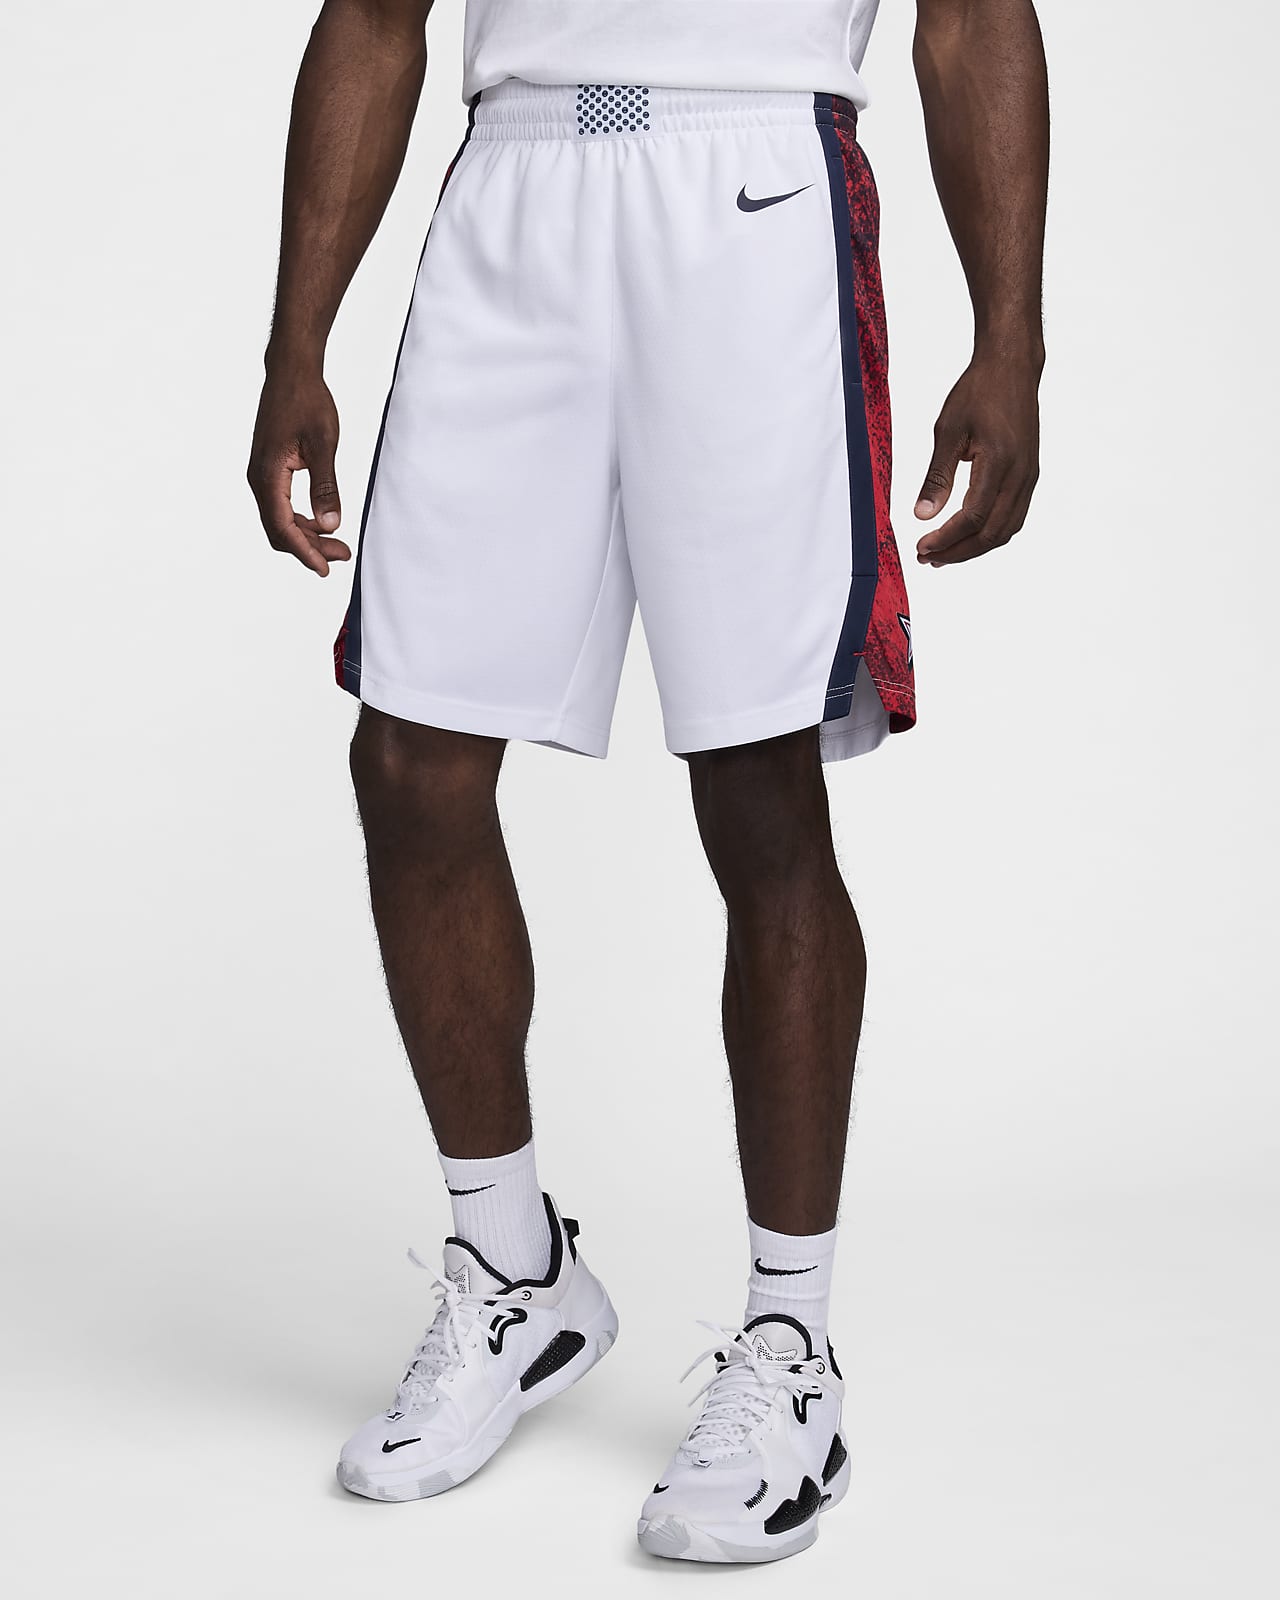 USA Limited Home Nike basketbalshorts voor heren